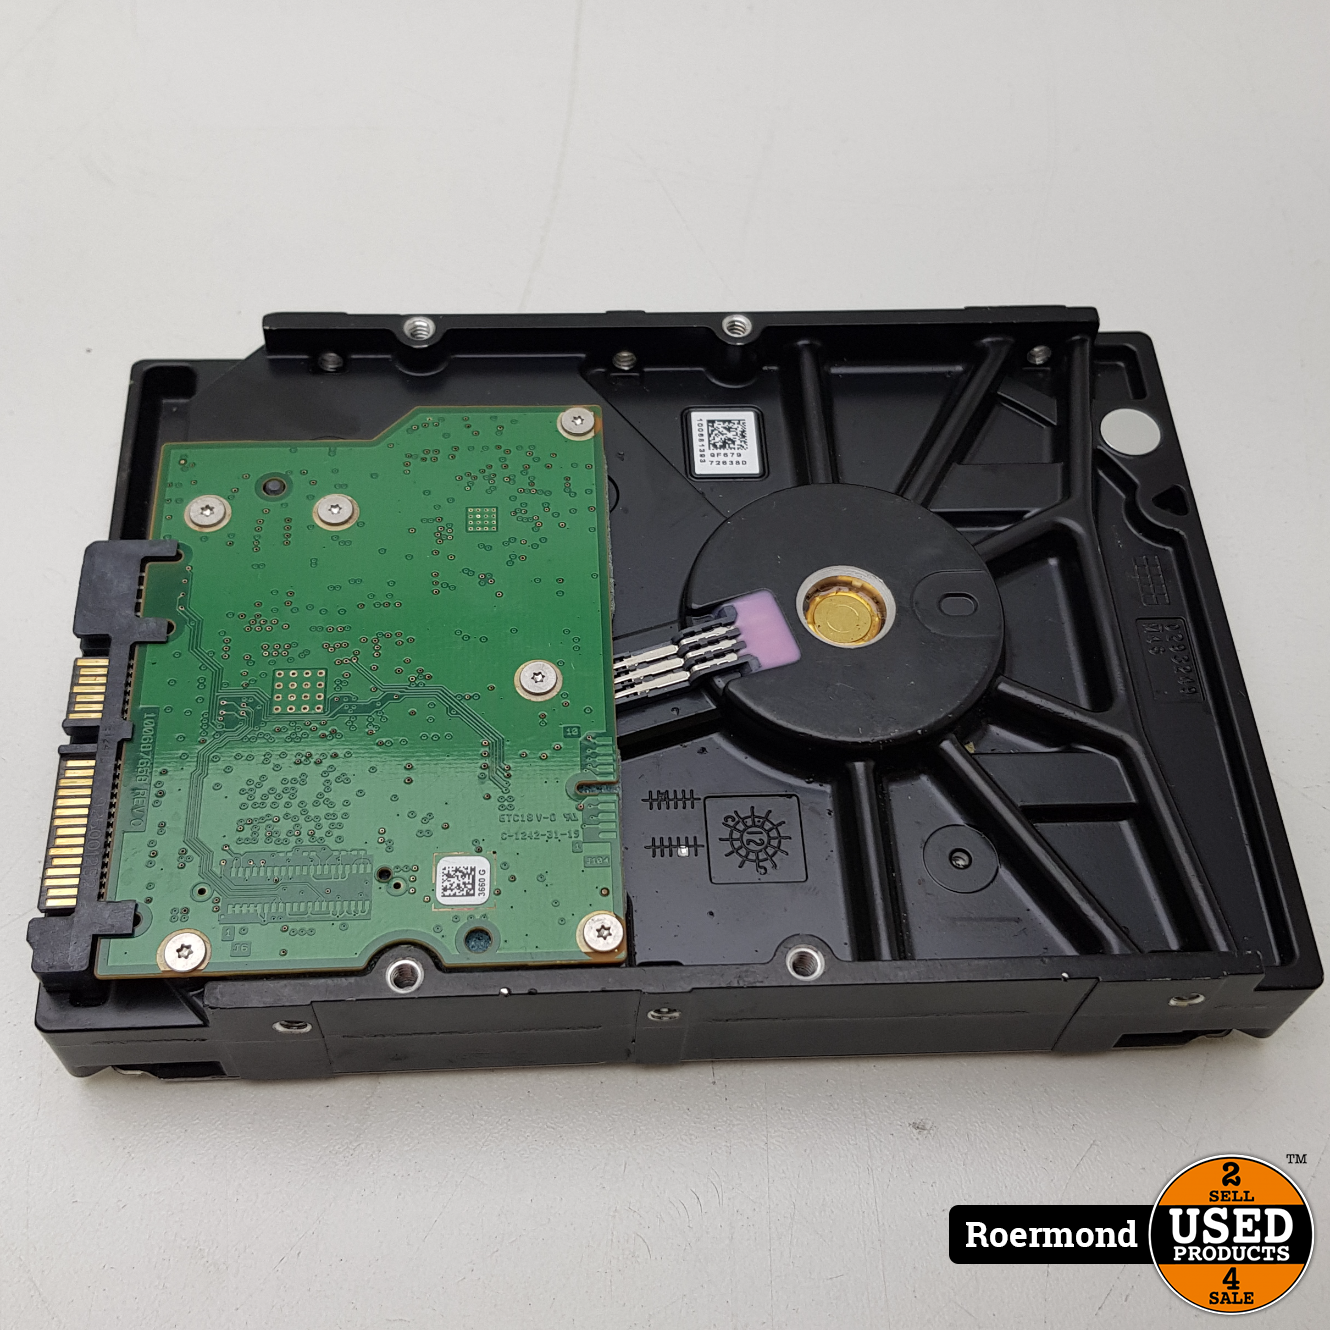 Inzichtelijk beklimmen tint Seagate 2000GB HDD Harde SchijfI Pre Owned - Used Products Roermond